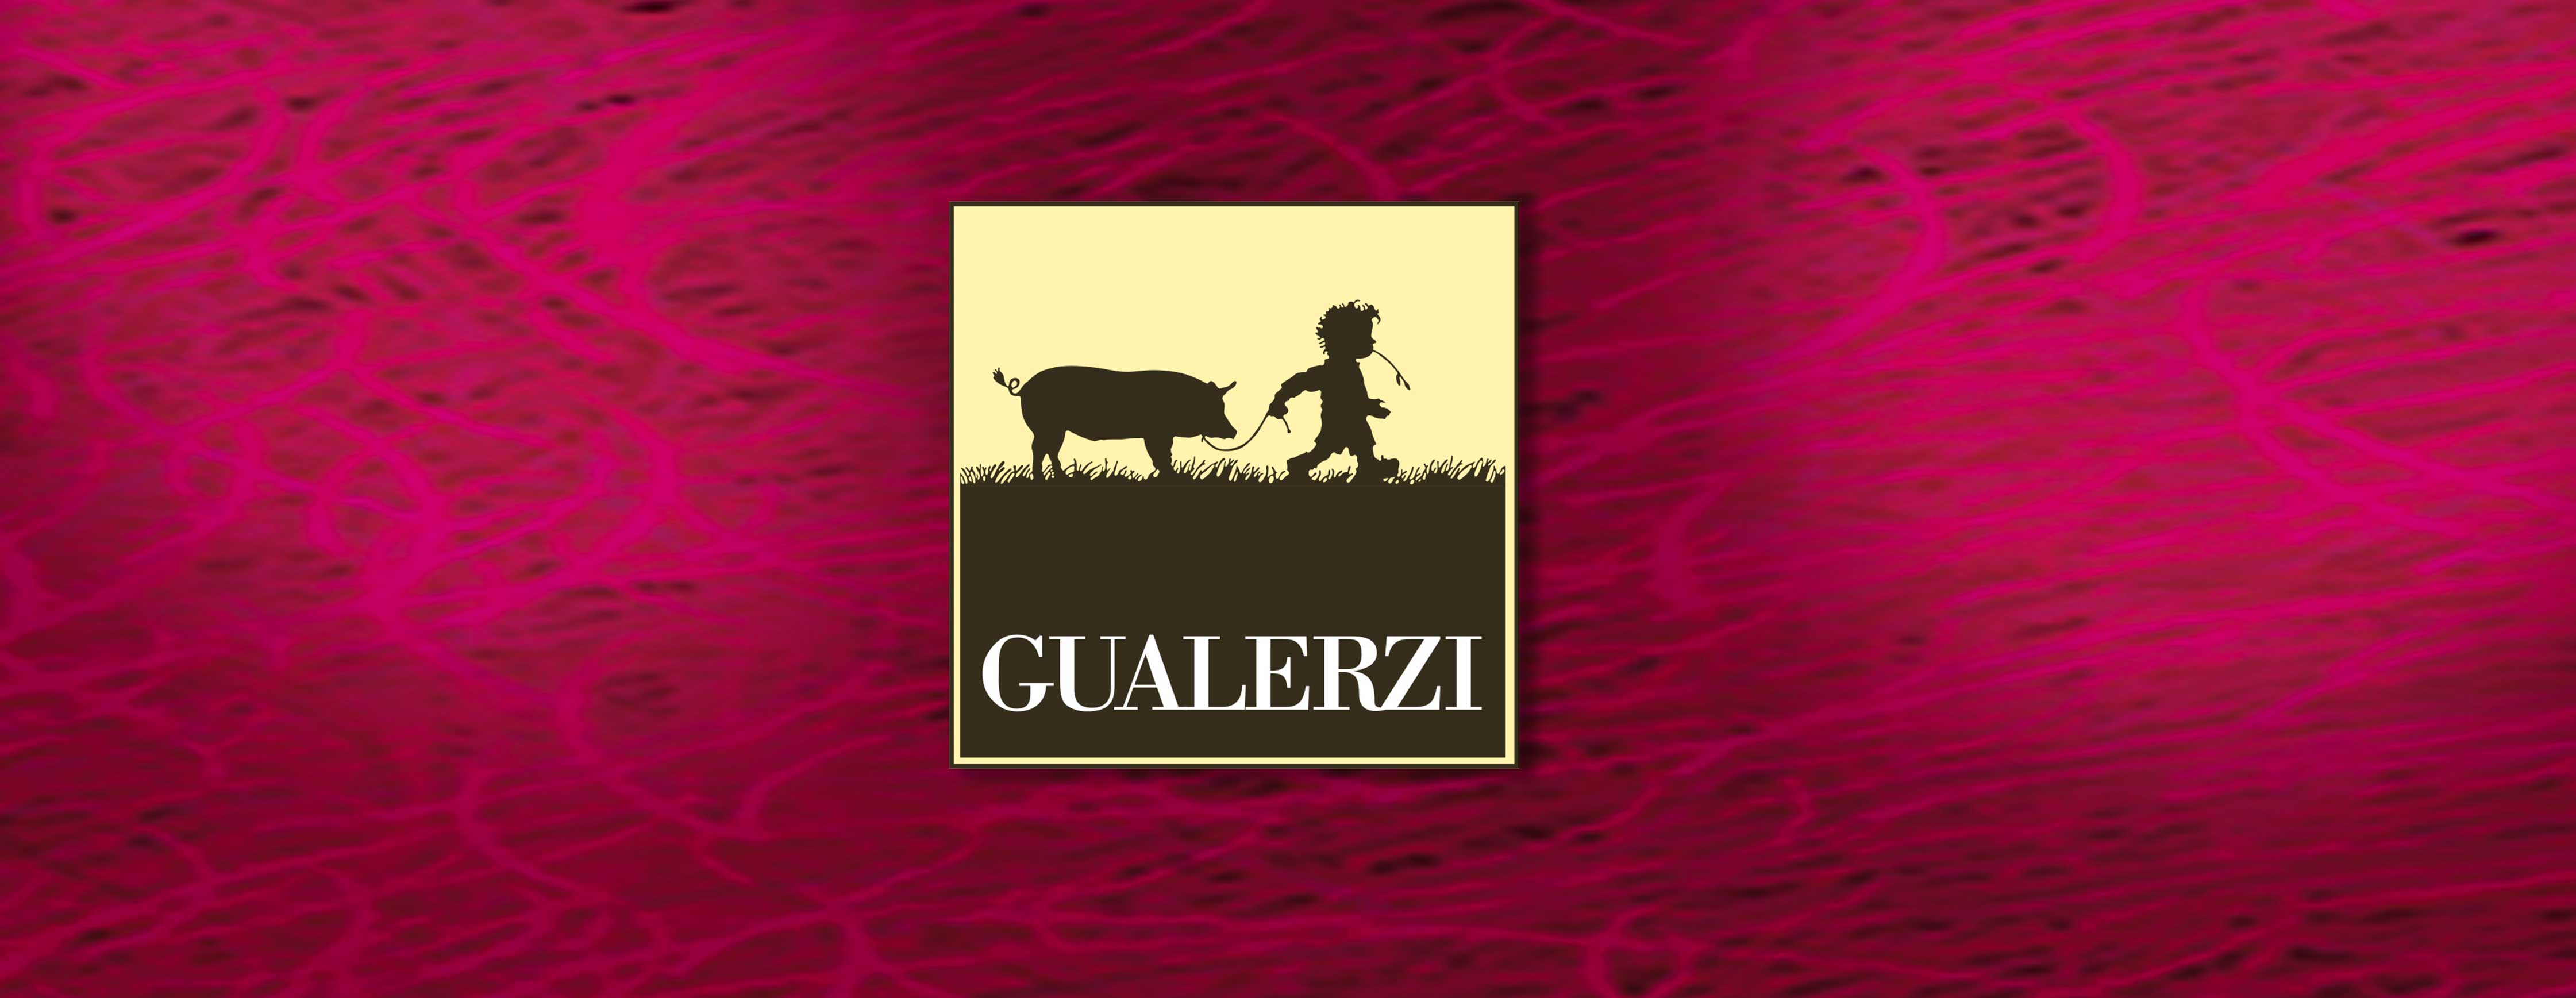 Gualerzi_branding